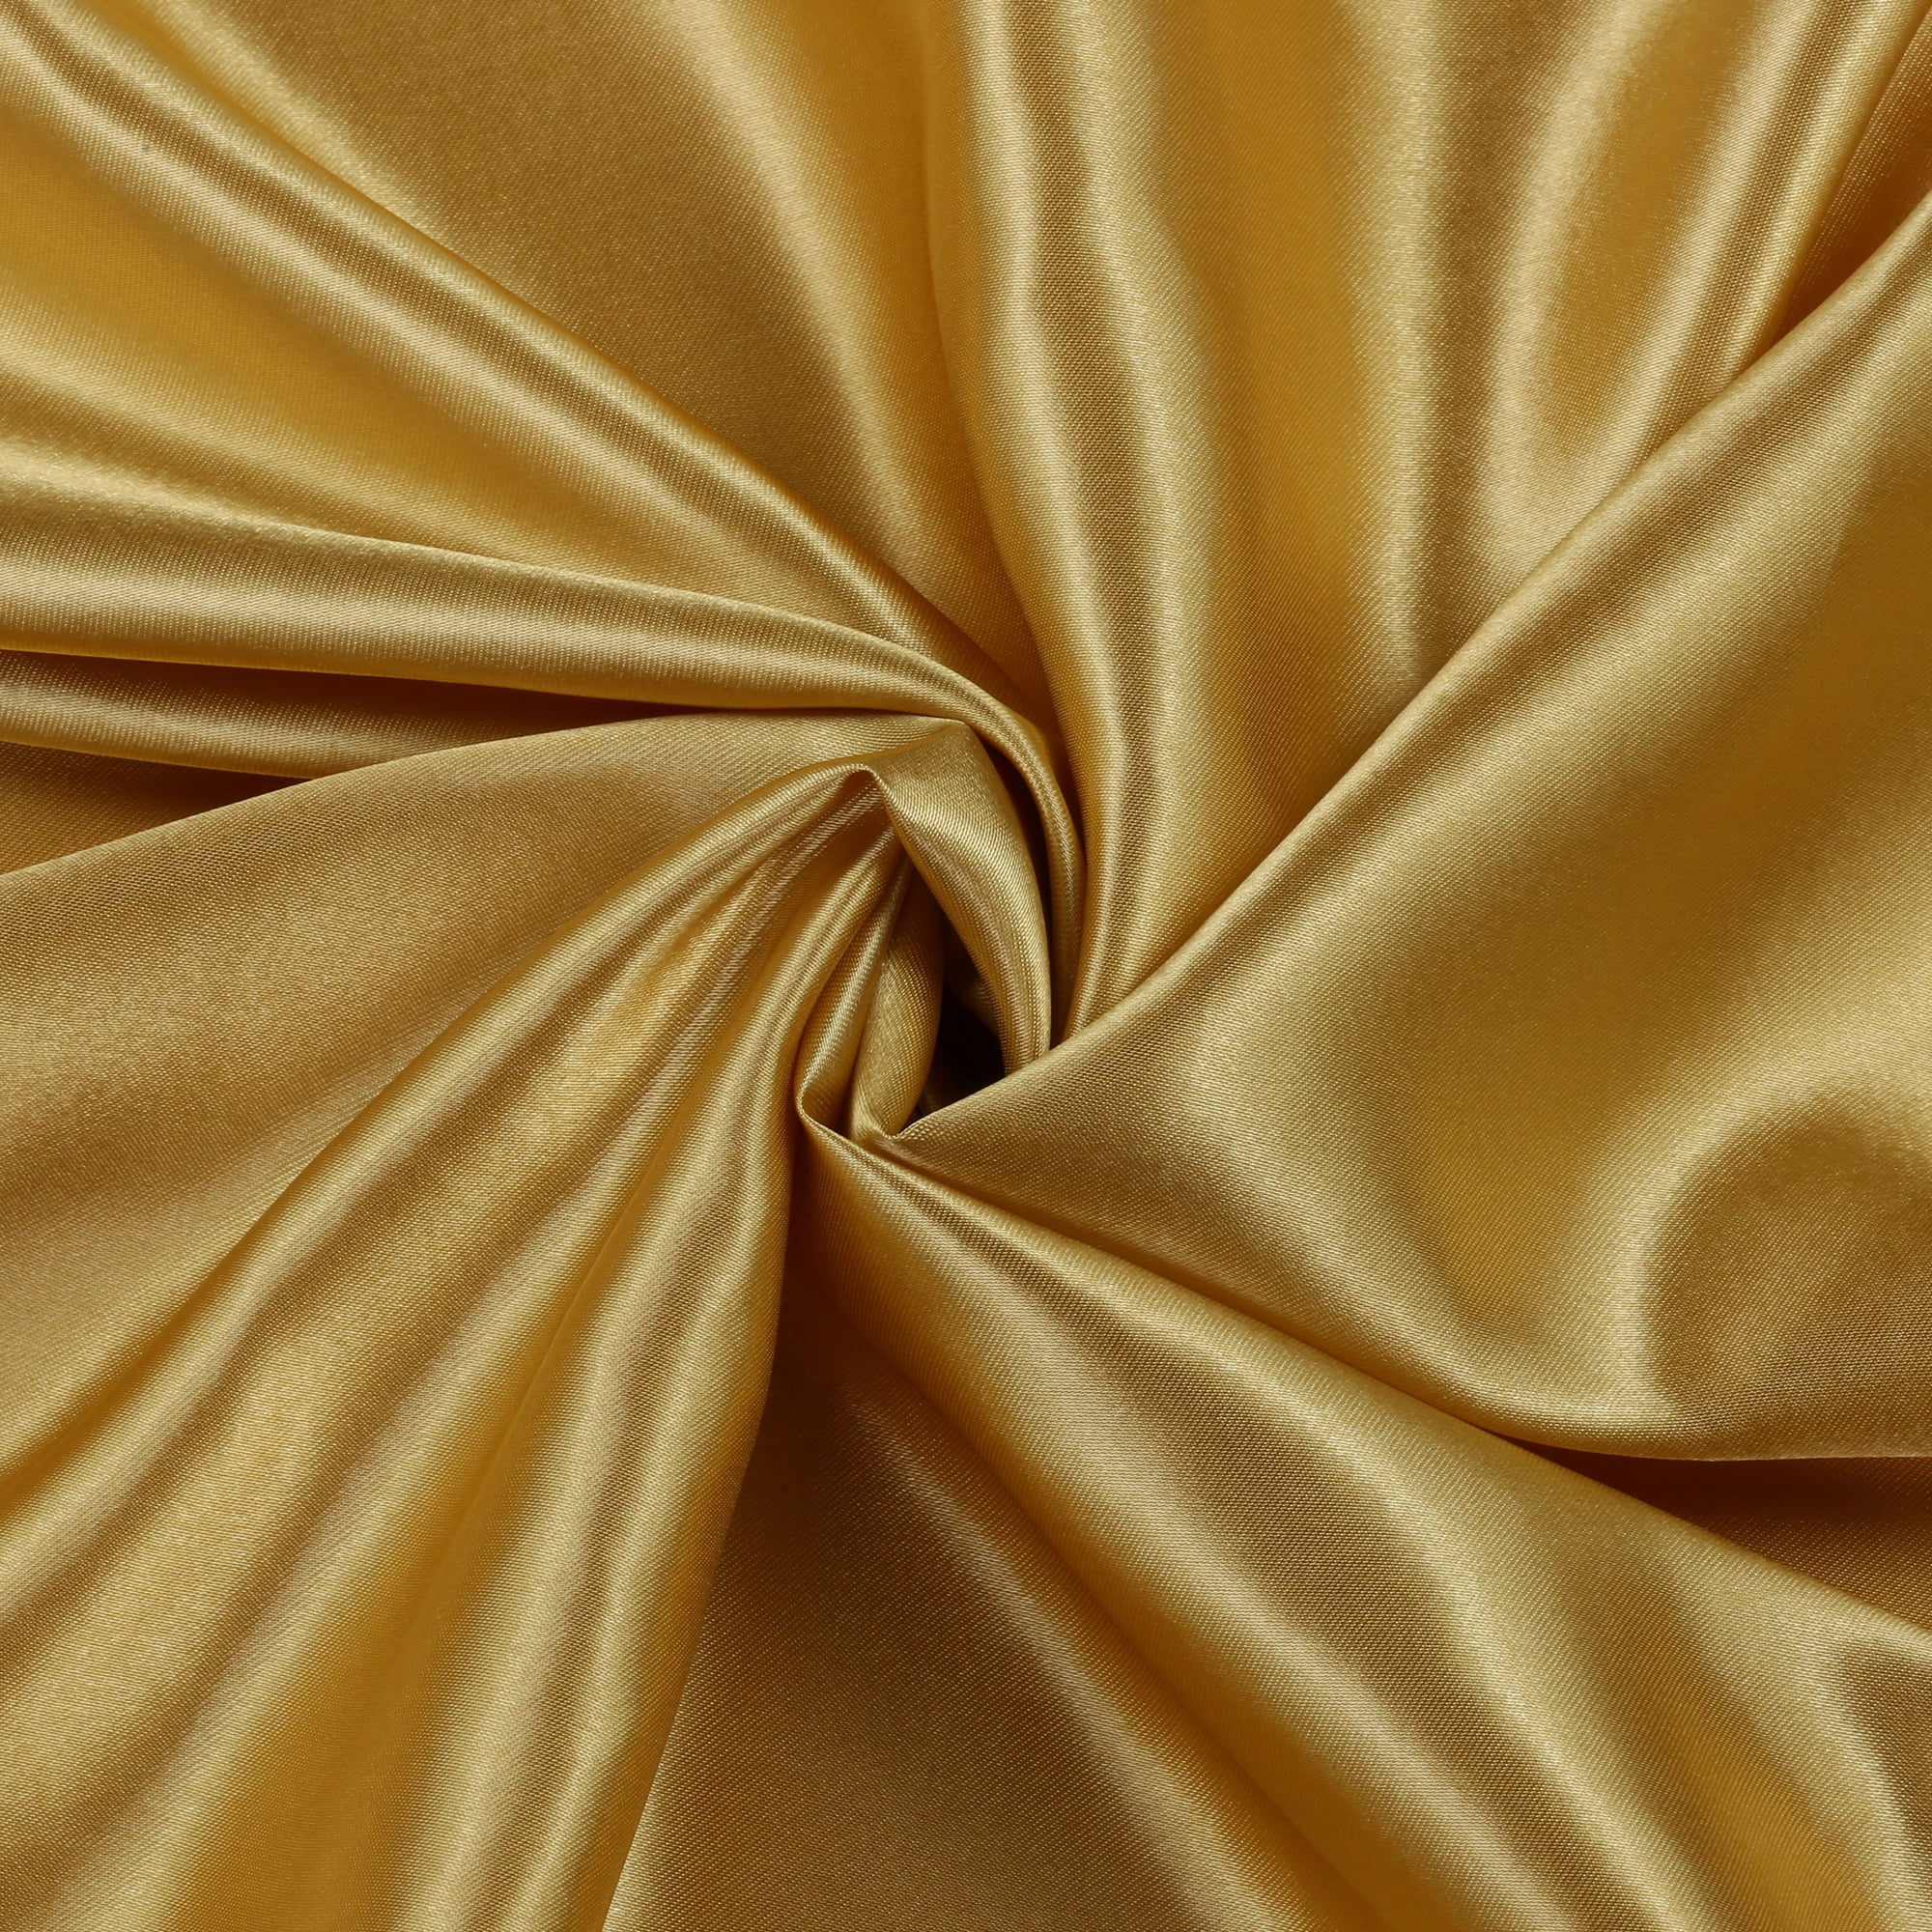 Silk Fabric, Pink Silk Cotton Blend Charmeuse Satin Fabric, Half Yard by 44  Wide 